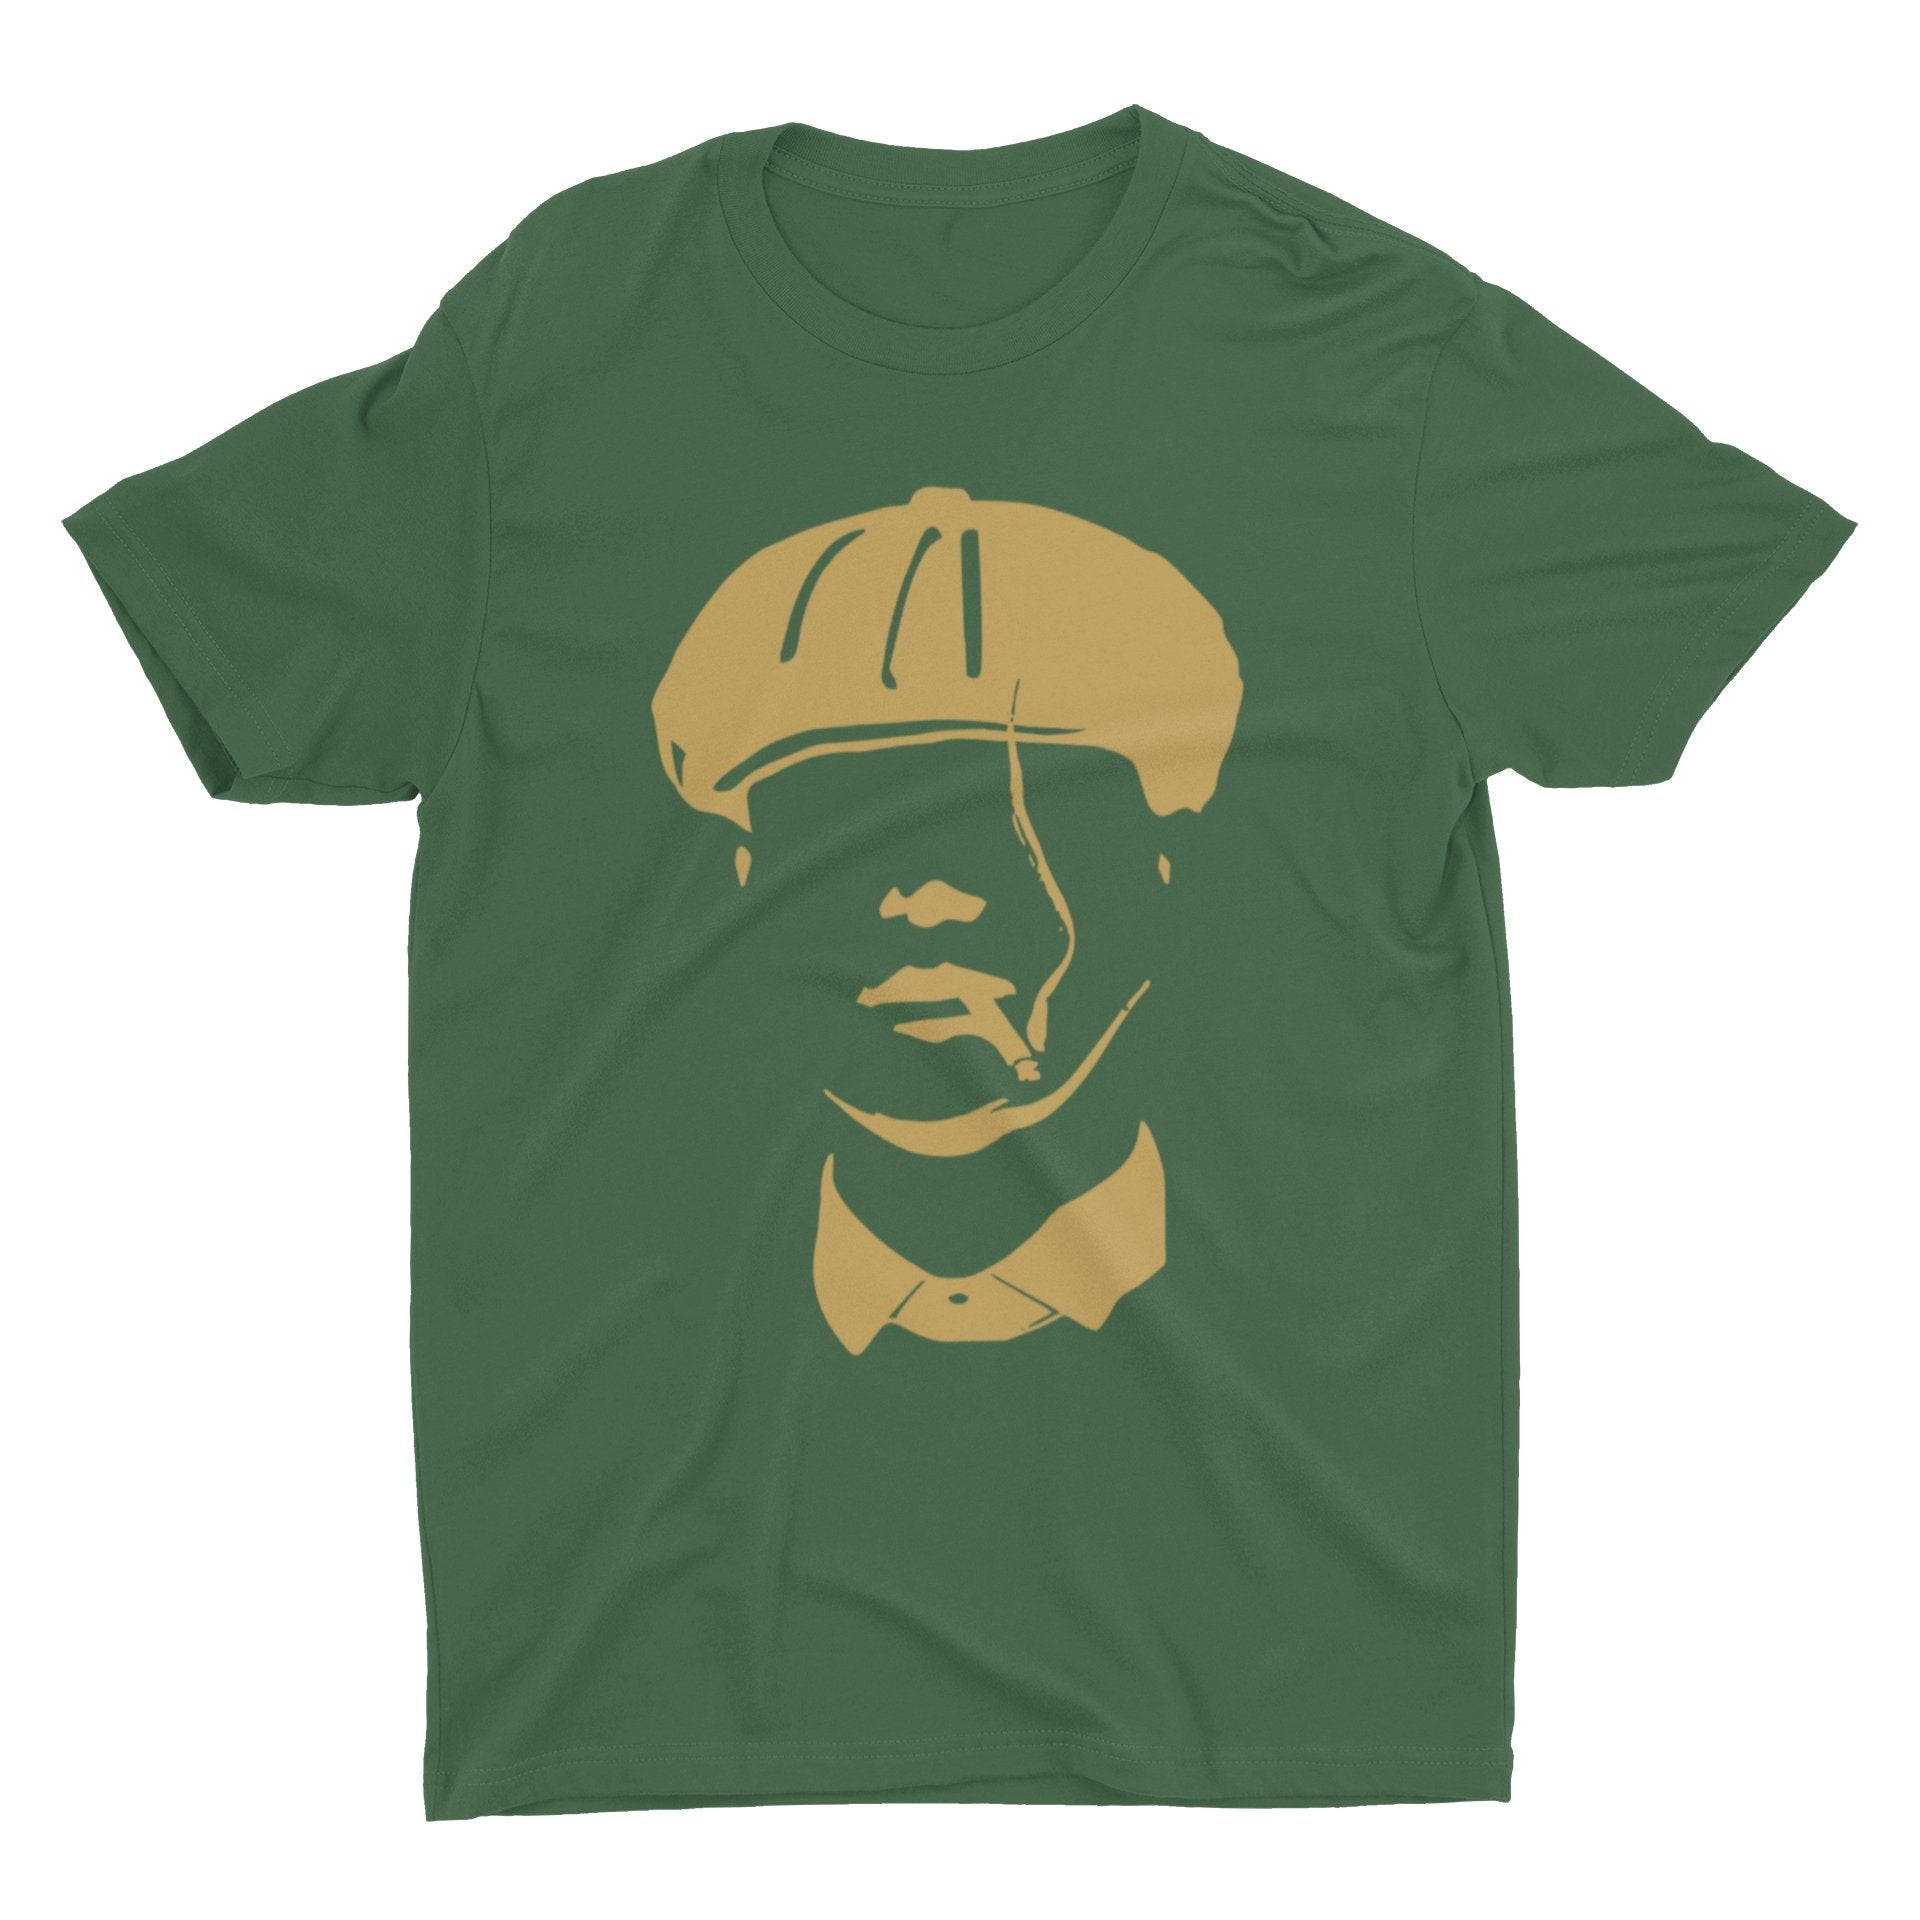 thelegalgang,Peaky Blinders Art T shirt for Men,.